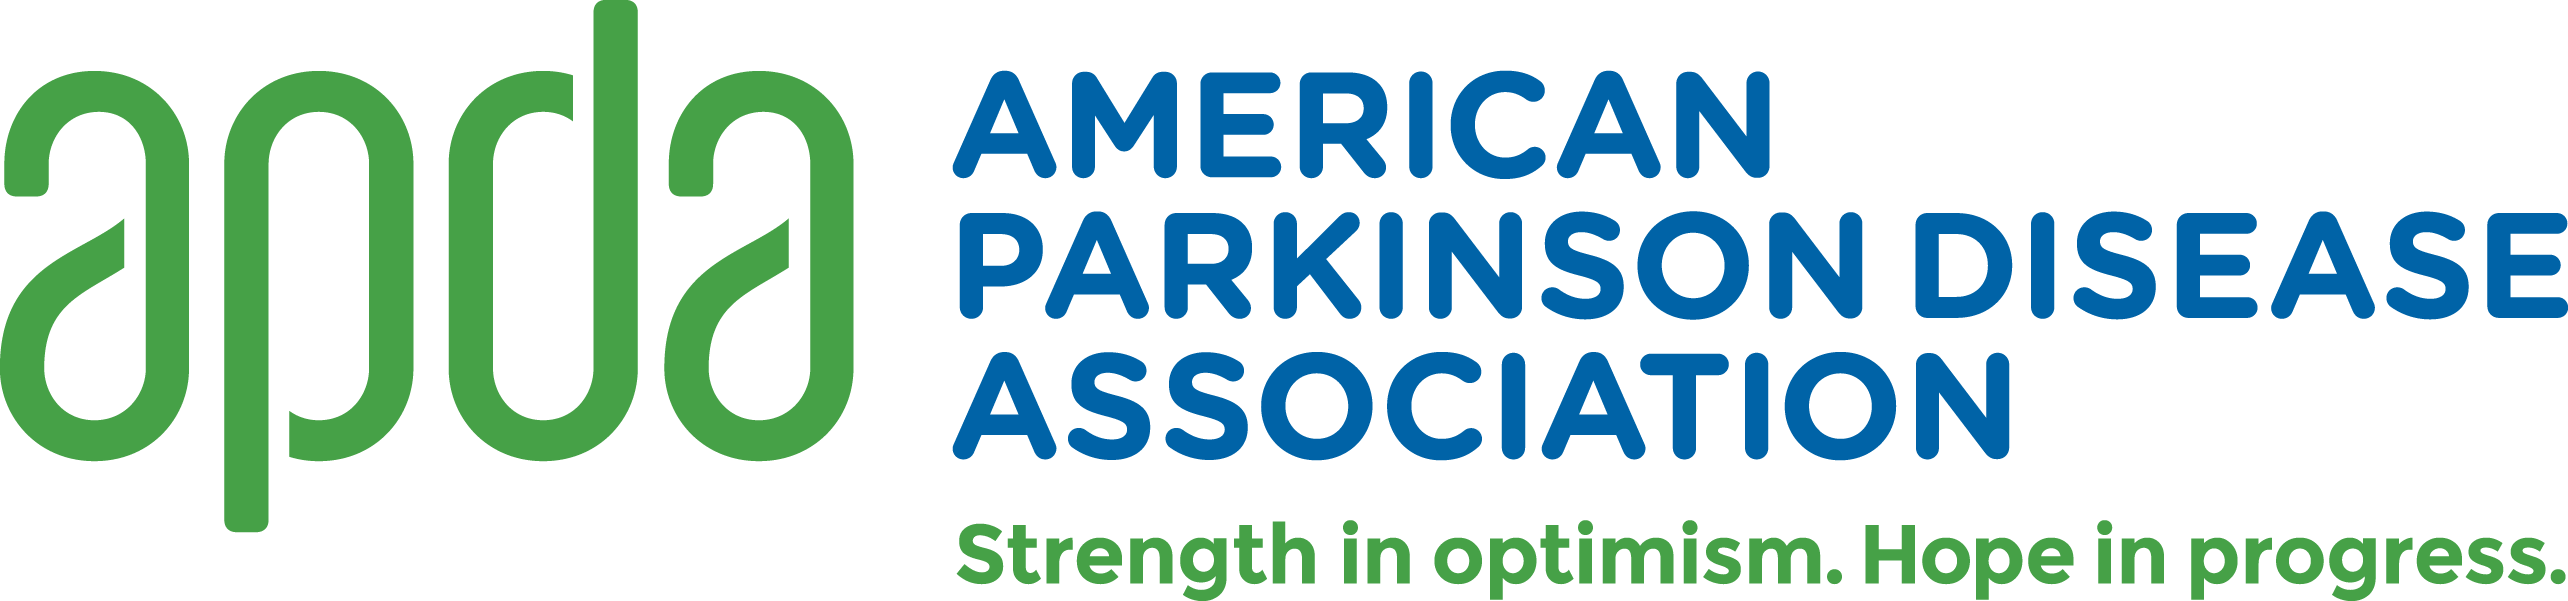 American Parkinson Disease Association Launches Professional Training Course to Educate About Advanced Parkinson's Disease